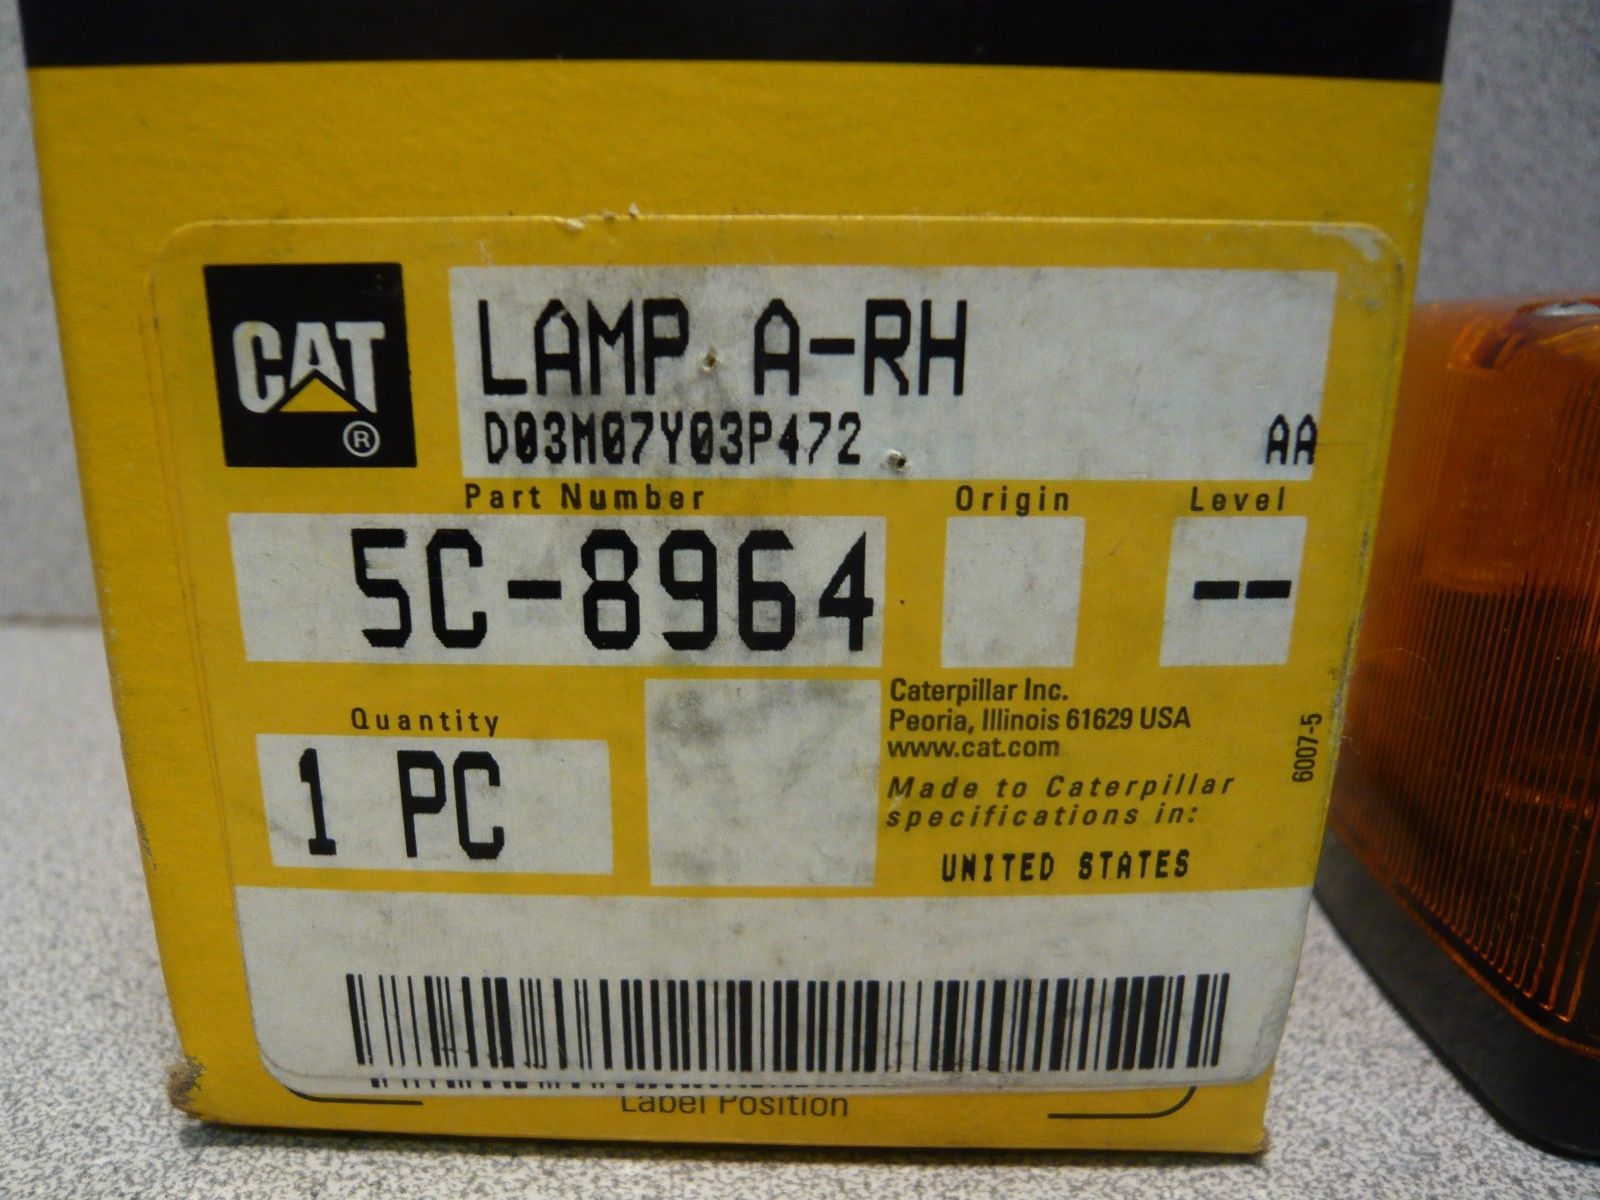 Caterpillar 5C-8964 Signal Lamp, RH